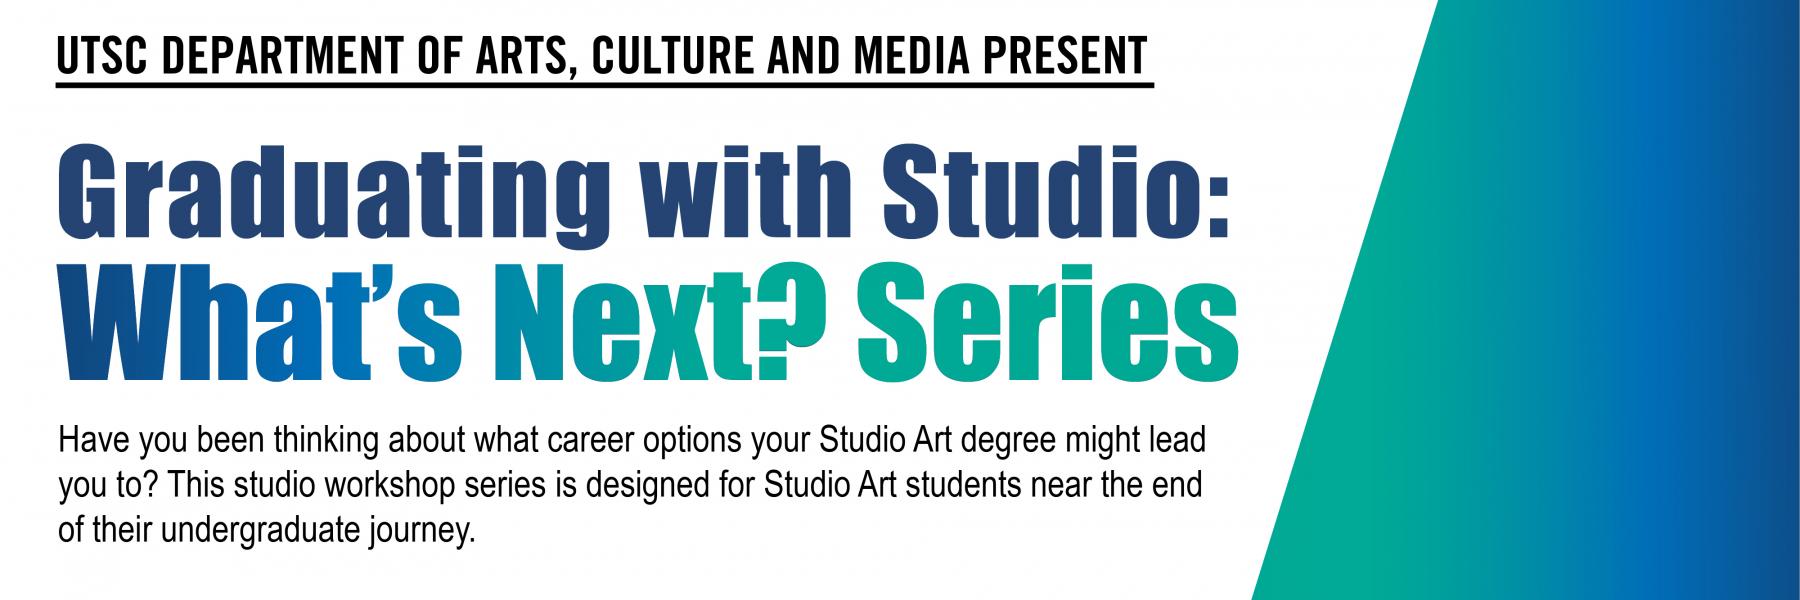 Graduating with Studio: What's Next? Series